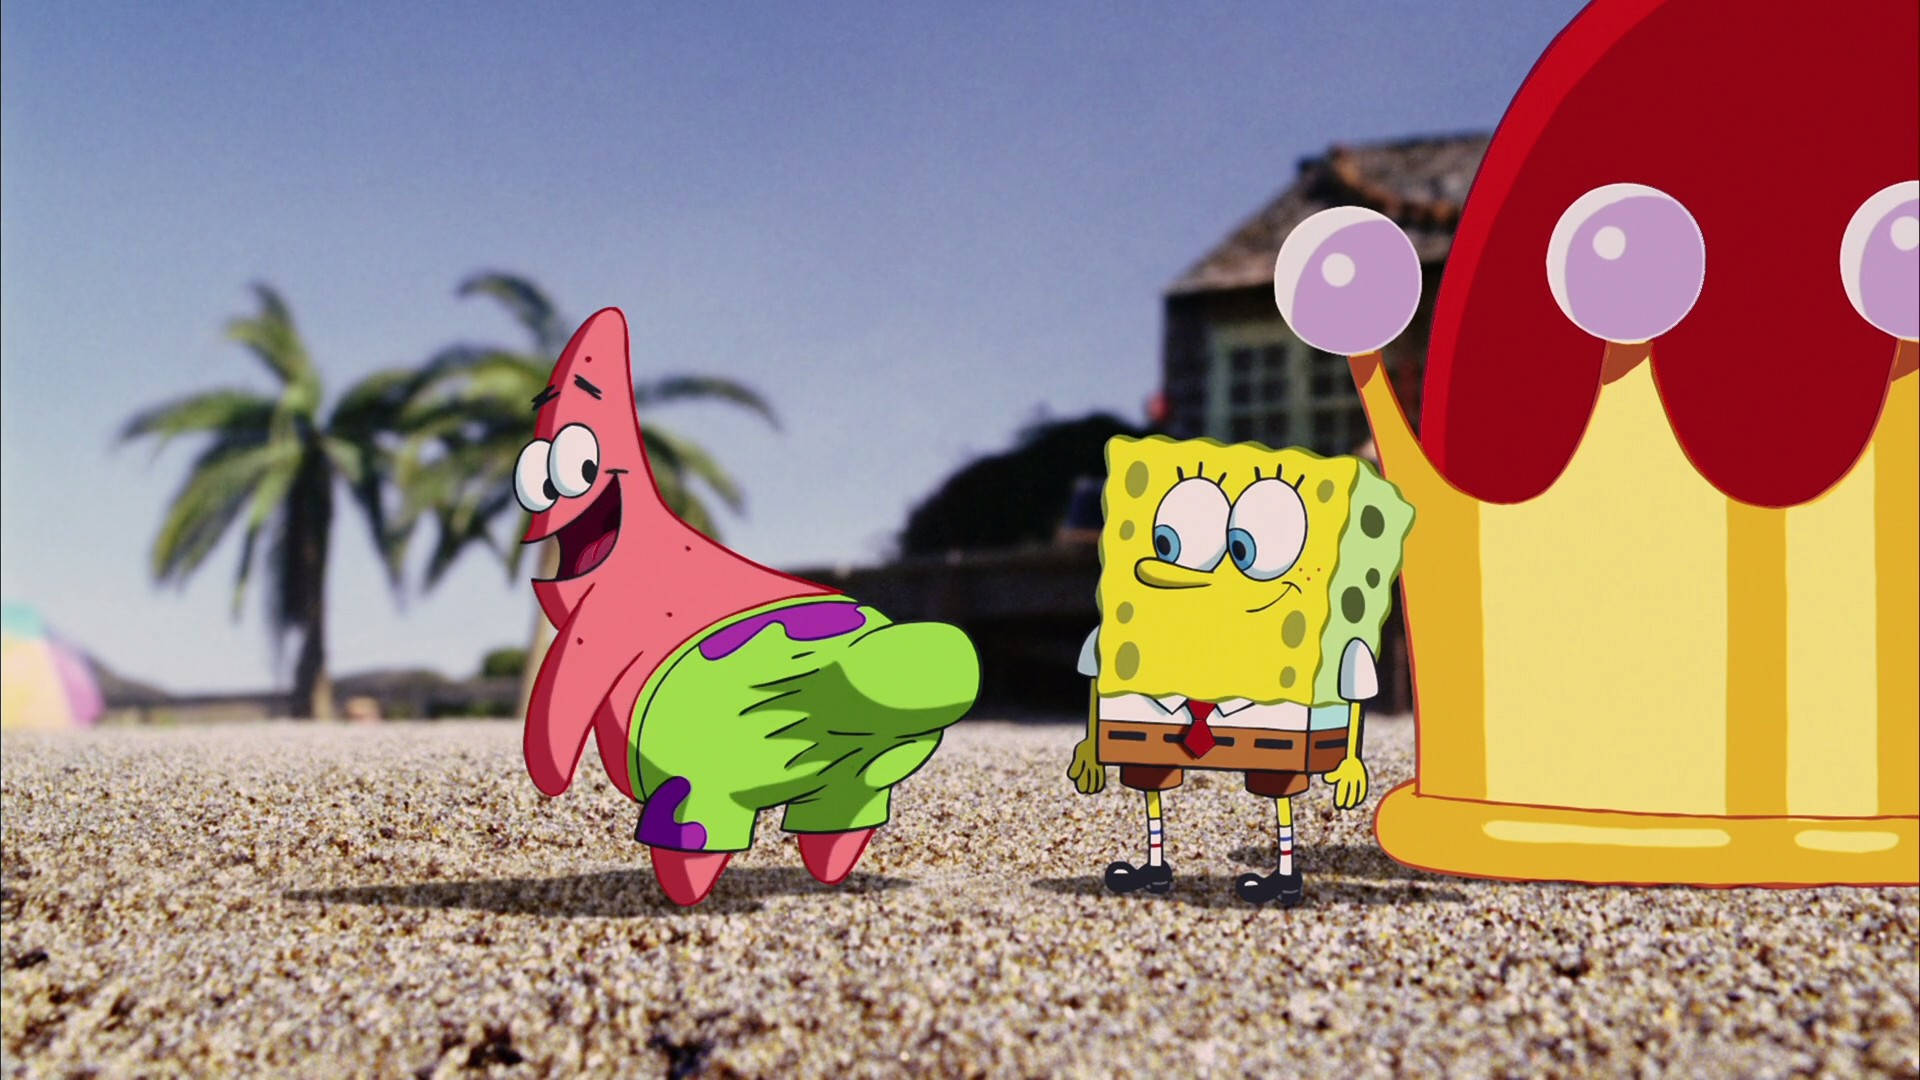 Funny Spongebob And Patrick’s Bum Background